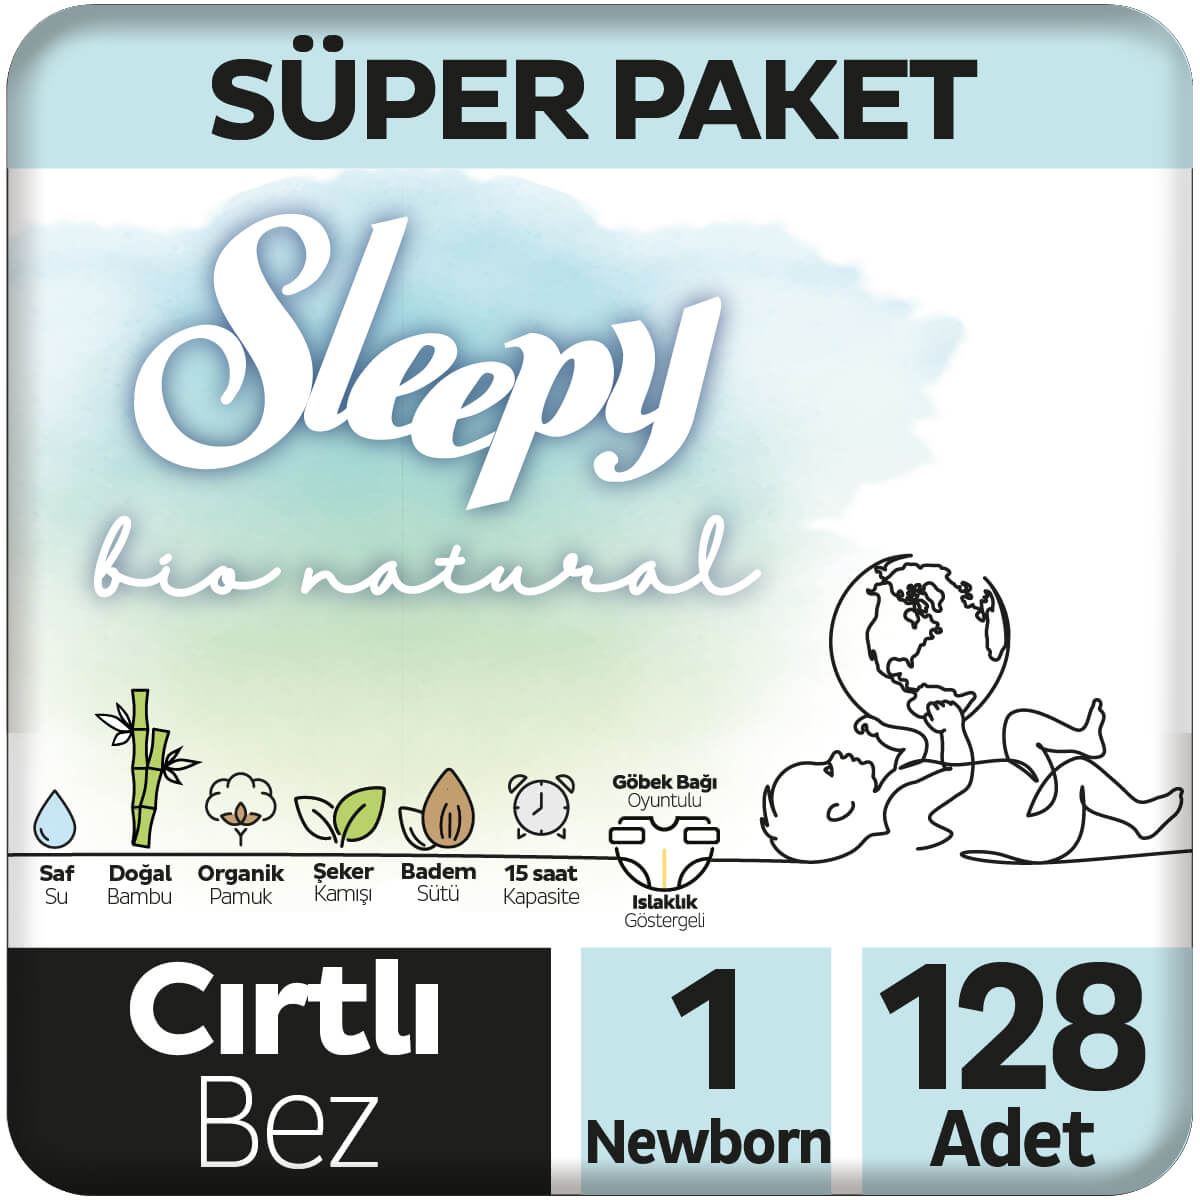 Sleepy Bio Natural Süper Paket Bebek Bezi 1 Numara Yenidoğan 128 Adet